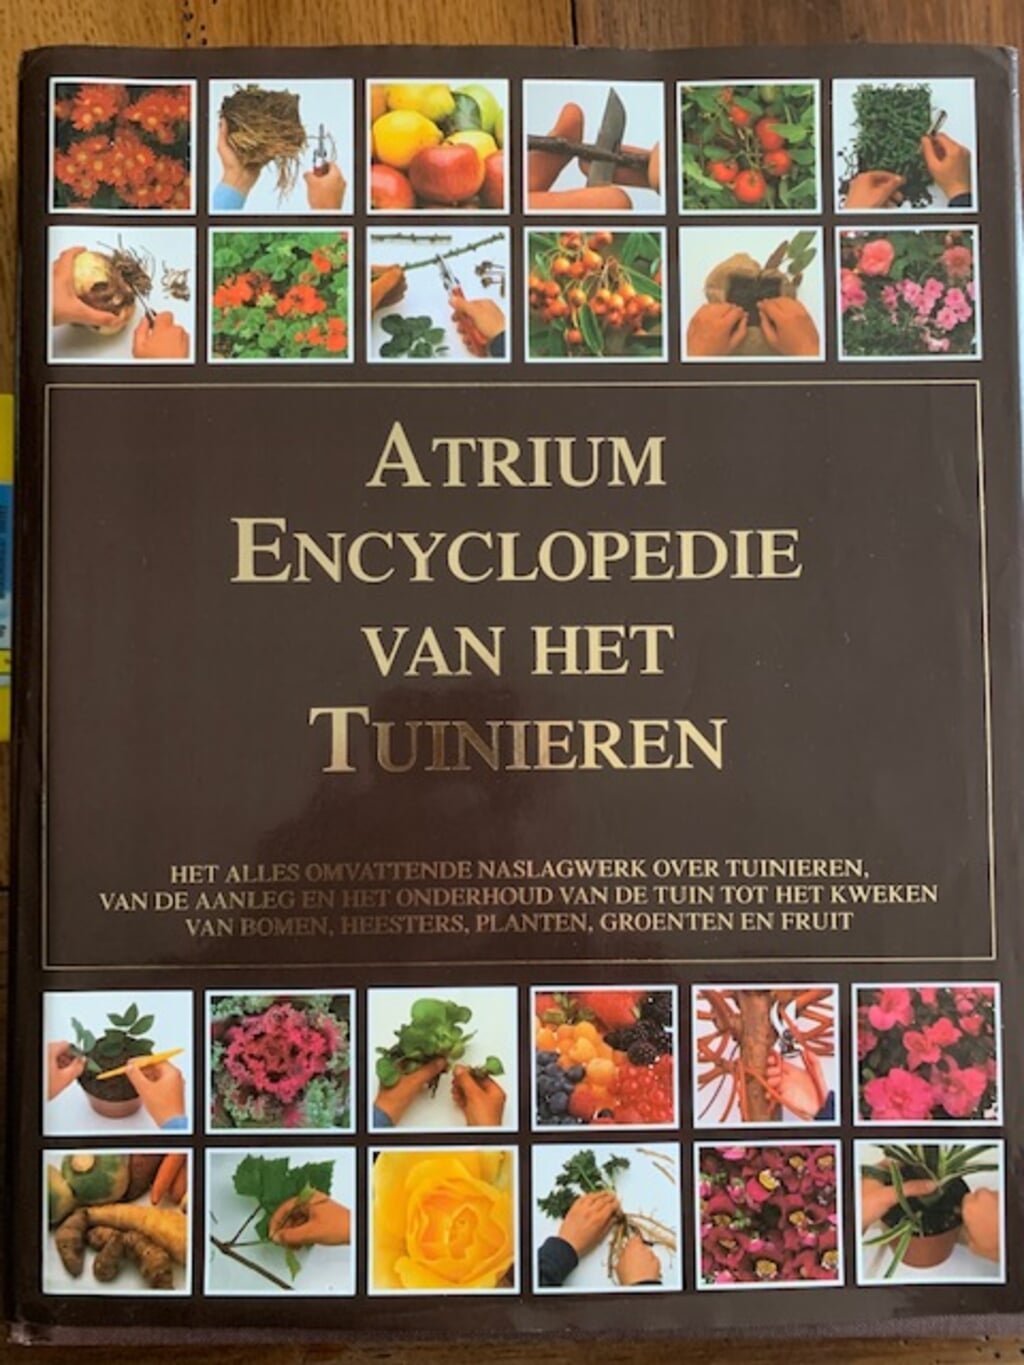 Atrium   Encyclopedie van het tuinieren